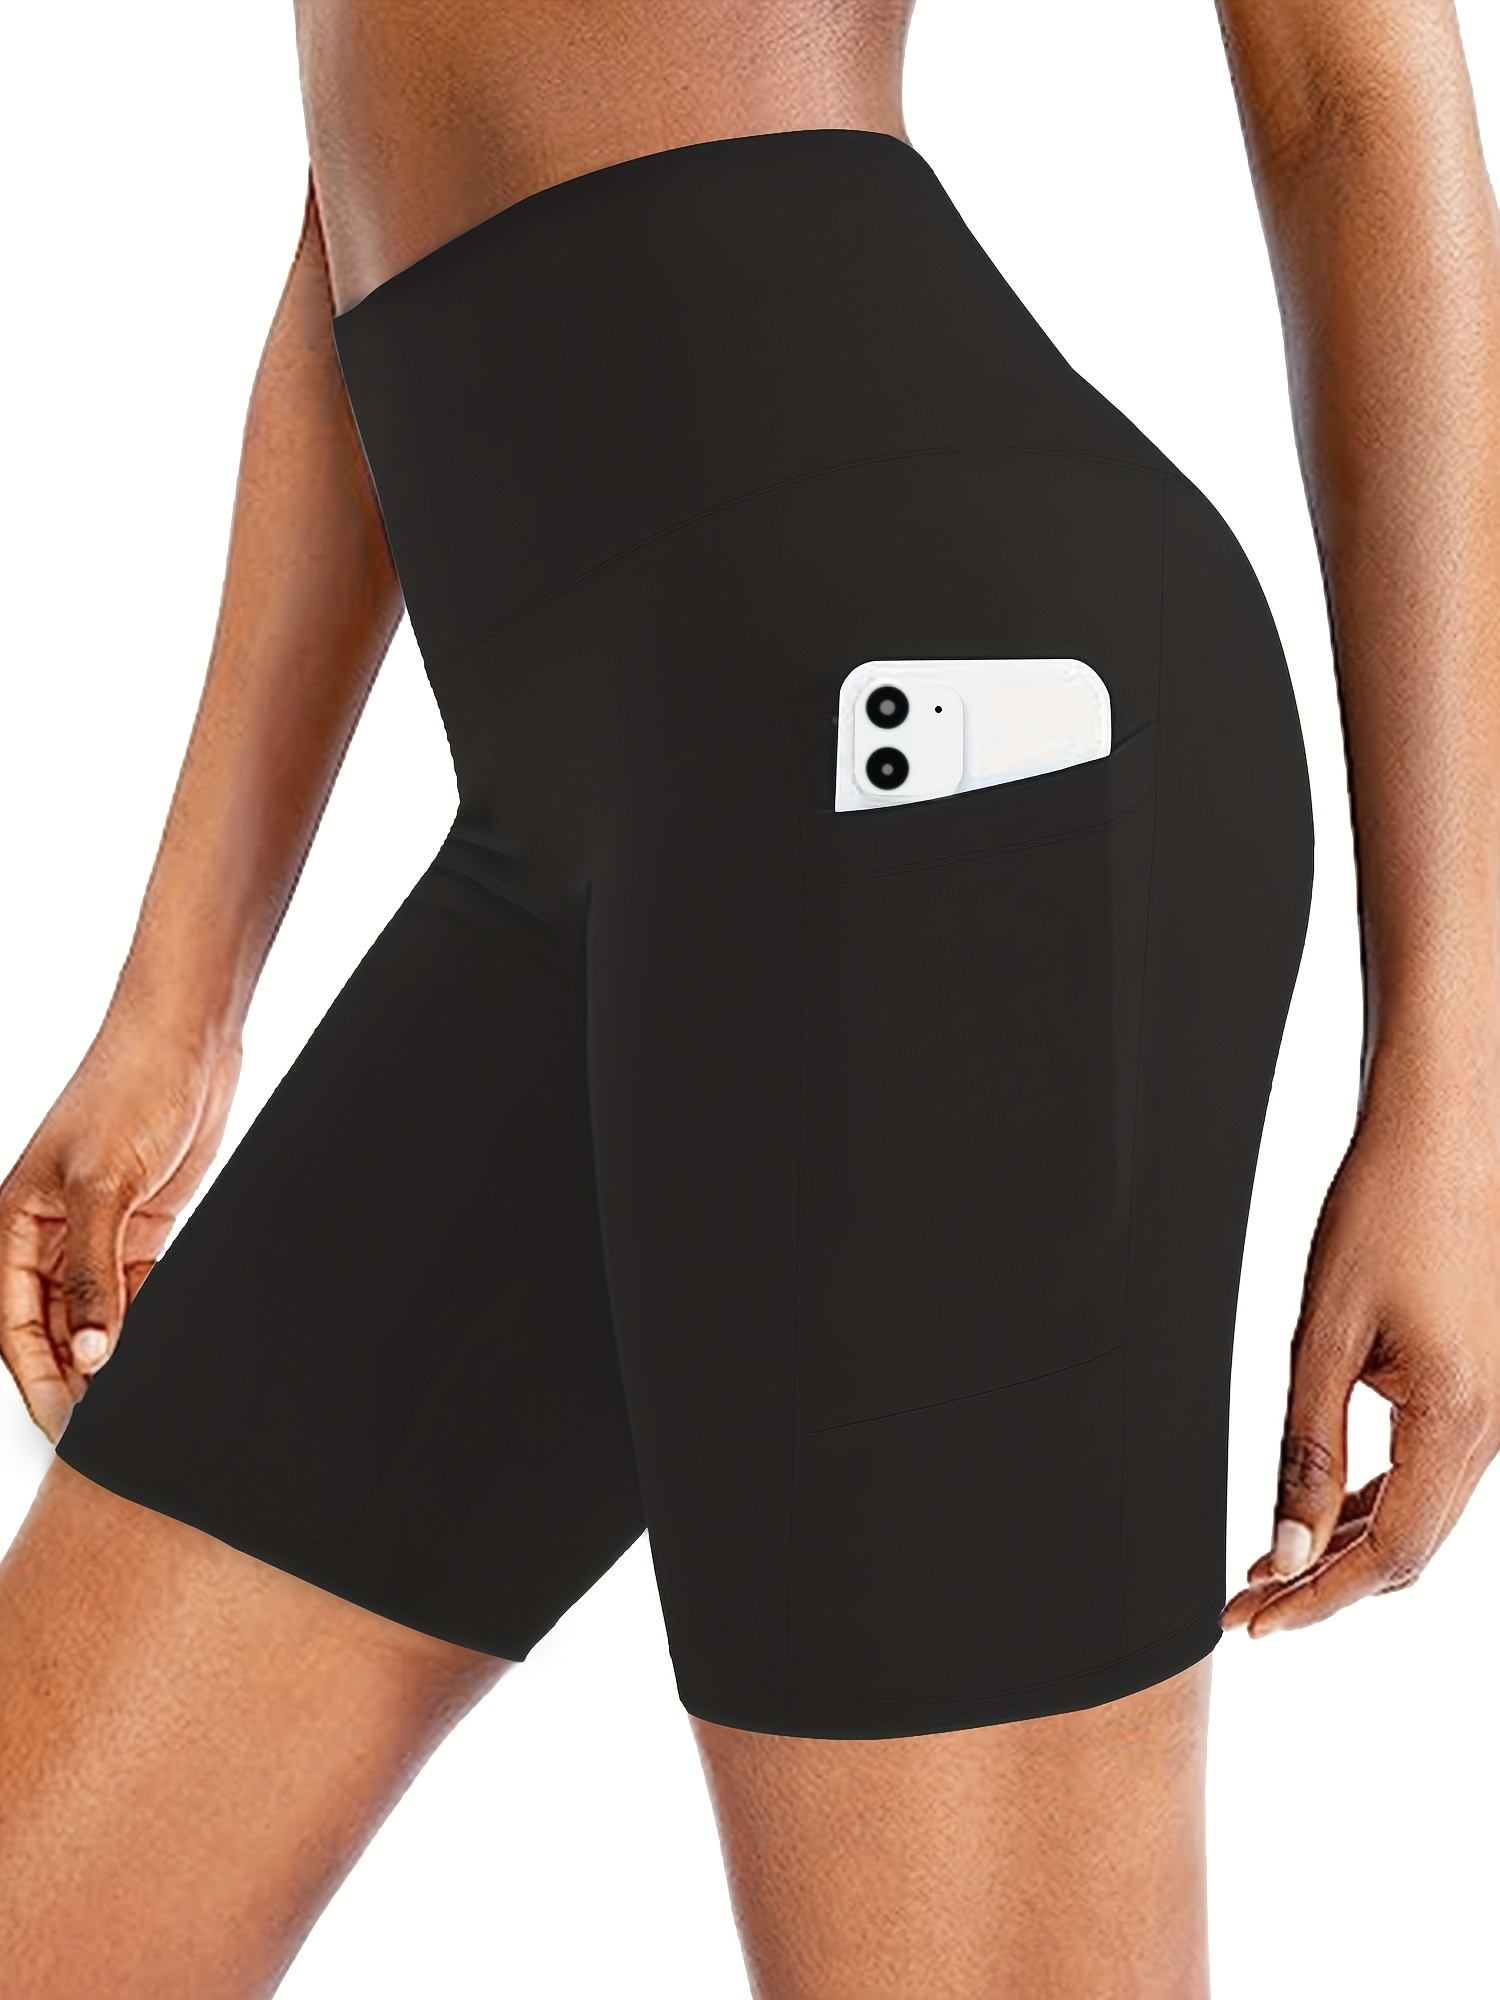 Slip Shorts for Women Stretch High Waisted Yoga Bike Shorts Comfort  Seamless Underwear Slimming Shapewear Shorts